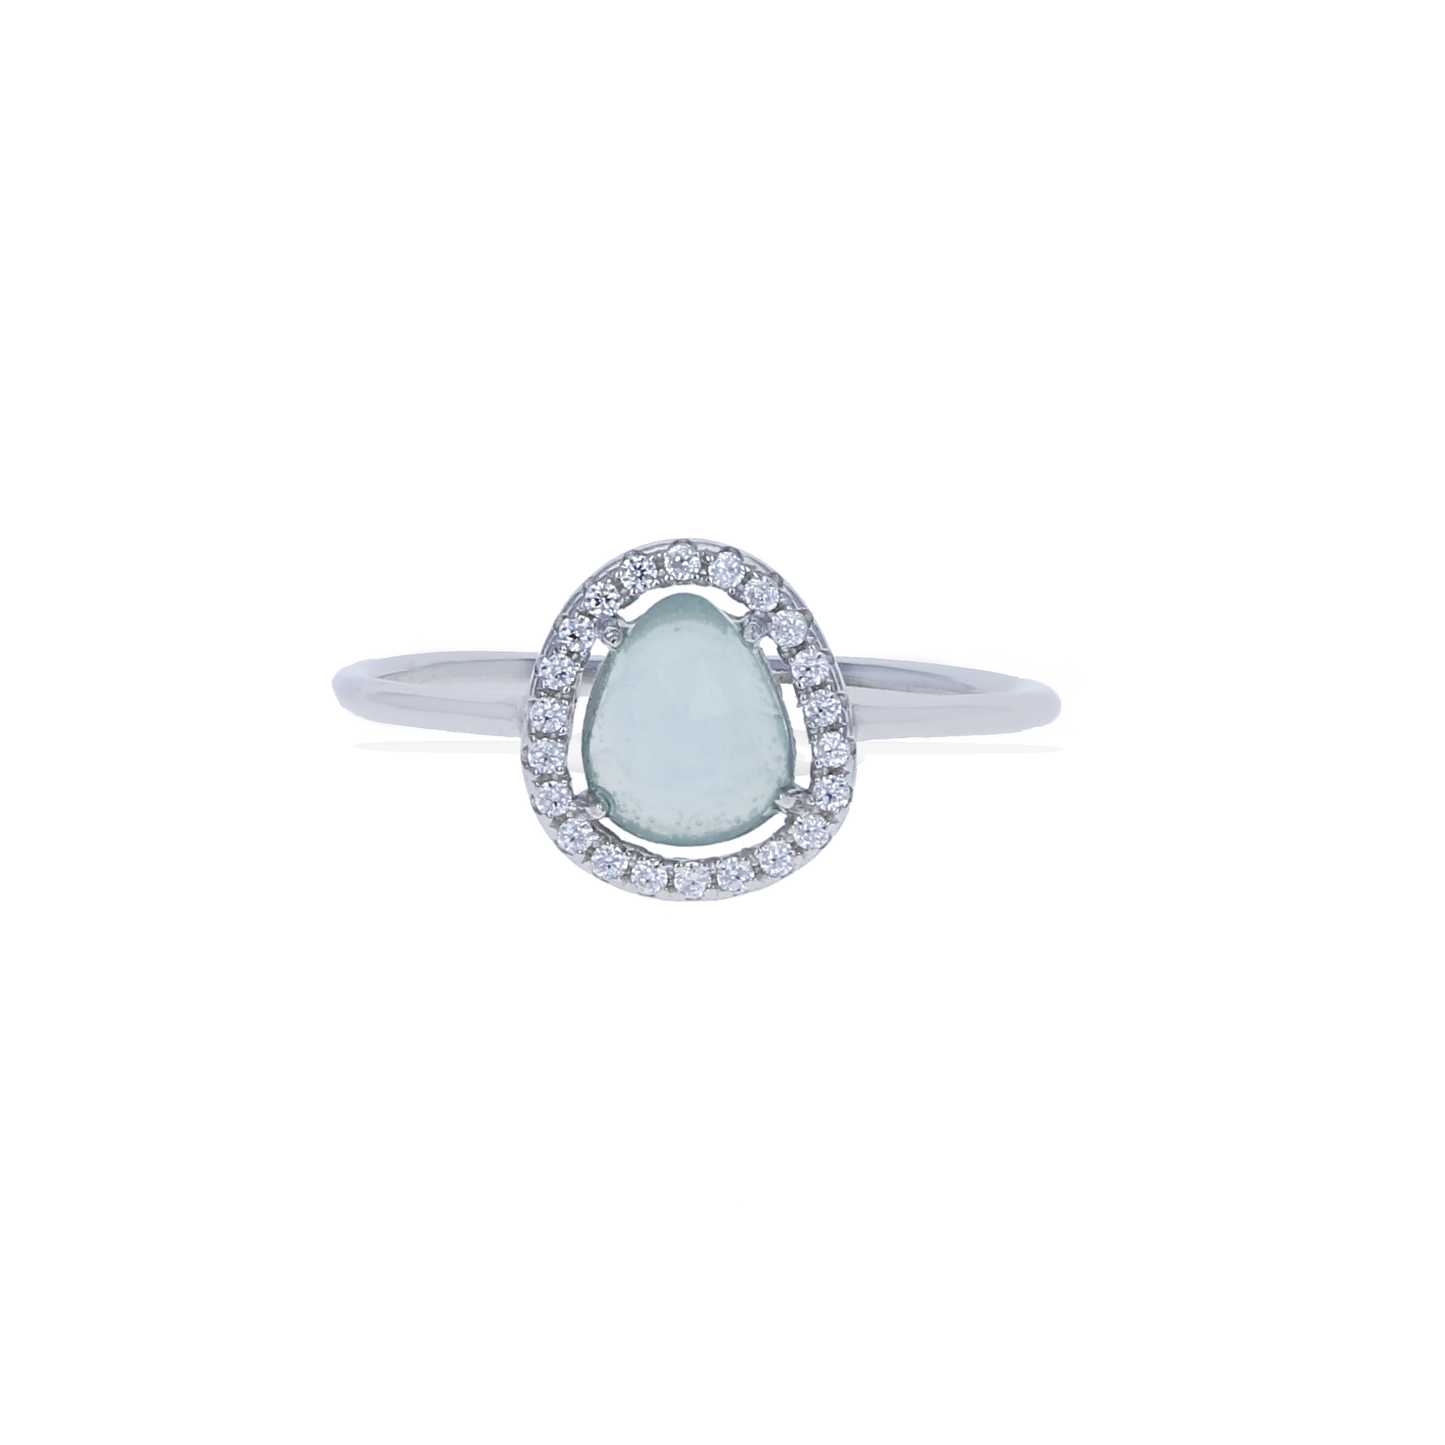 Aquamarine Gemstone Ring in Sterling Silver - Alexandra Marks Jewelry